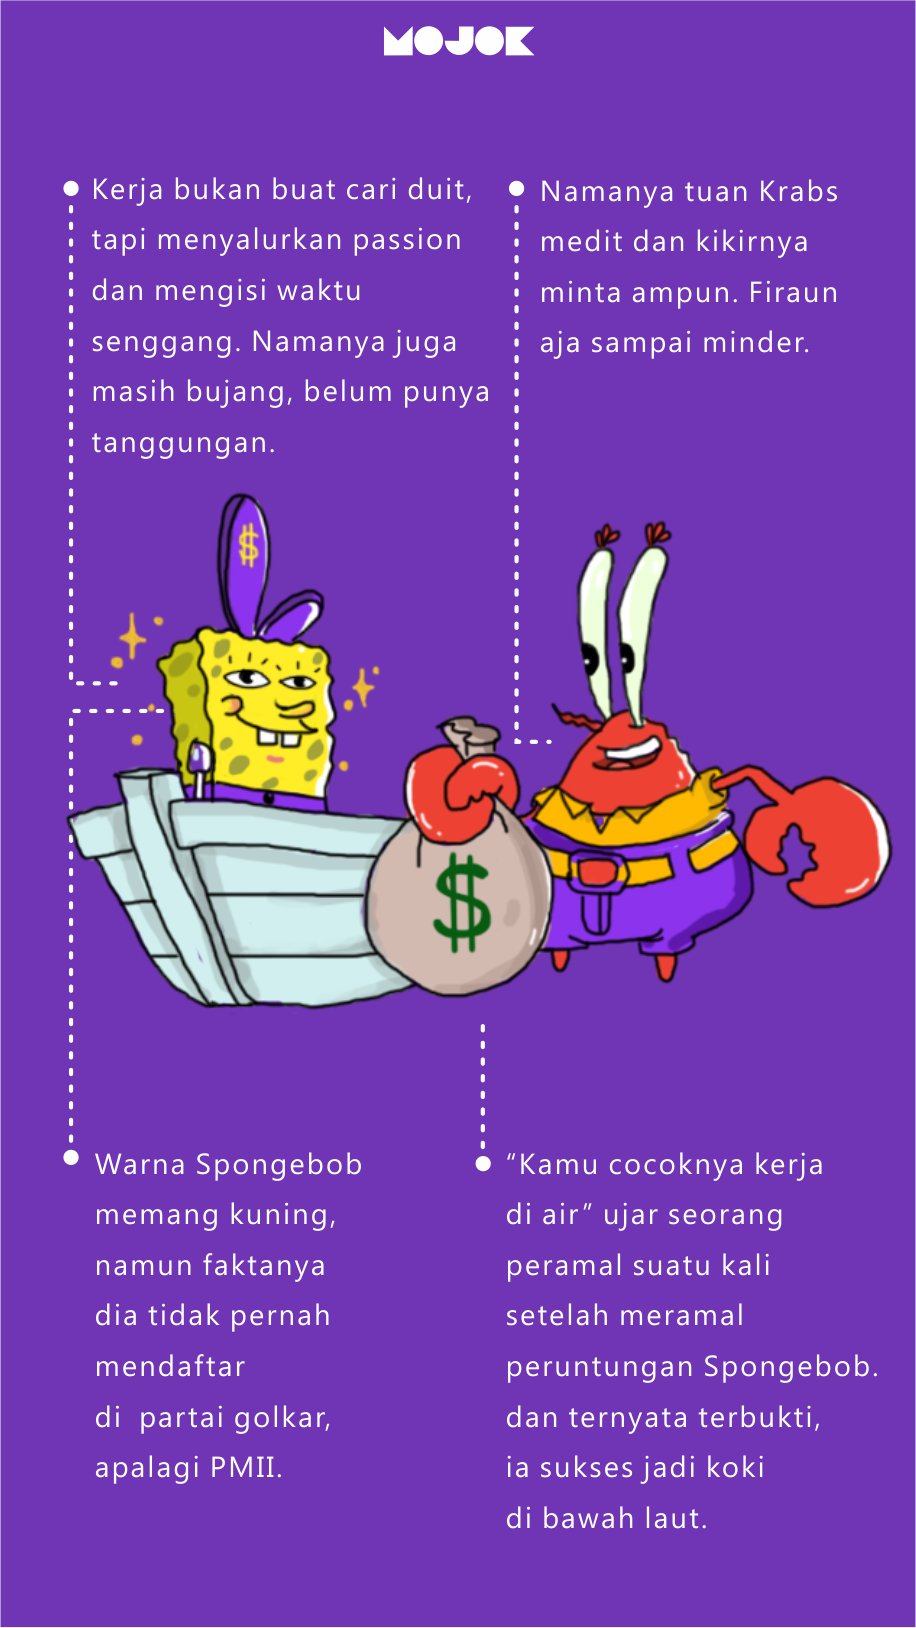 gaji spongebob